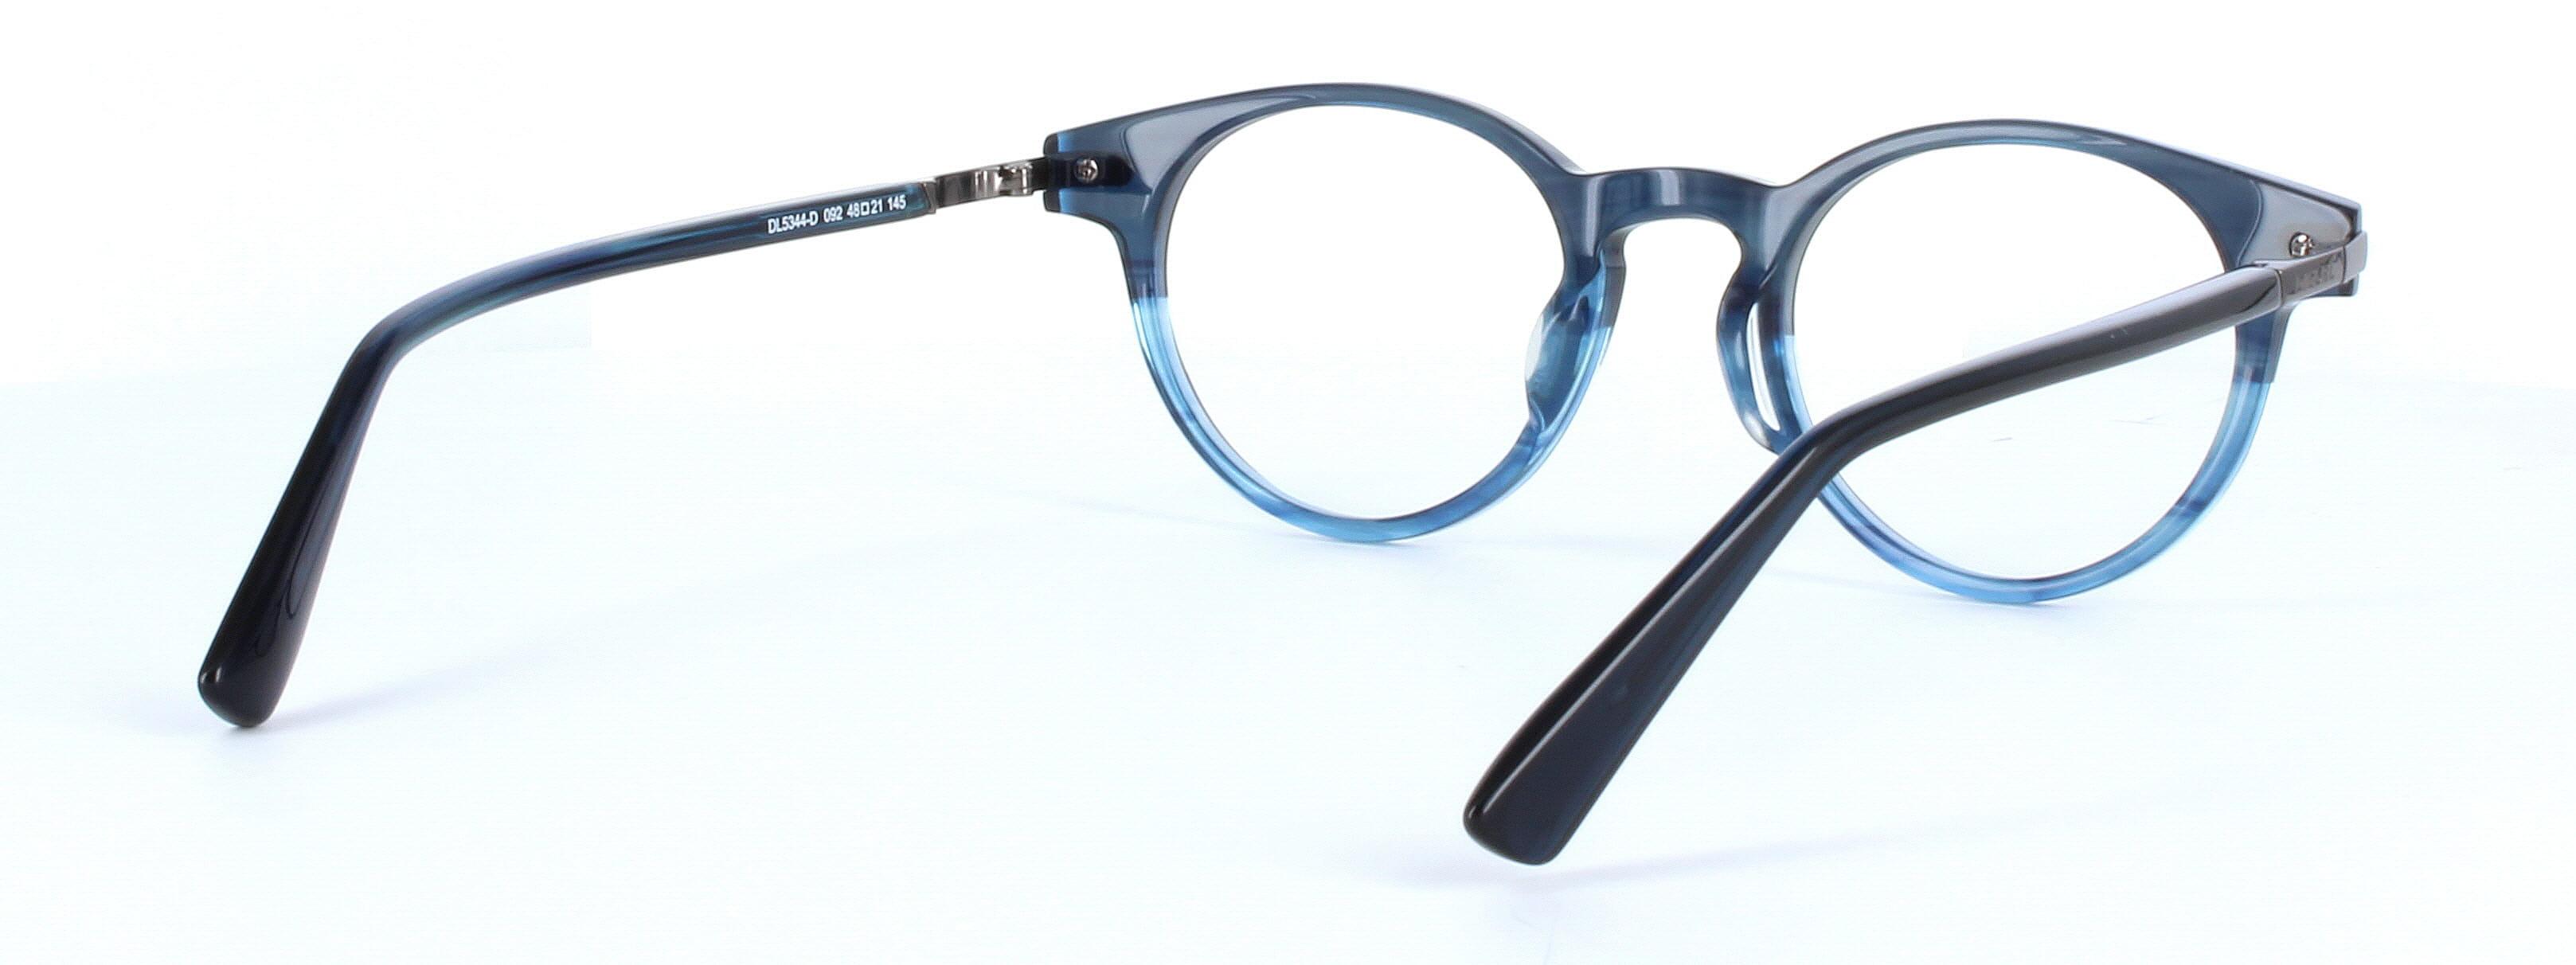 DIesel 5344 - Ladies round shaped designer glasses in blue stripe - image view 4